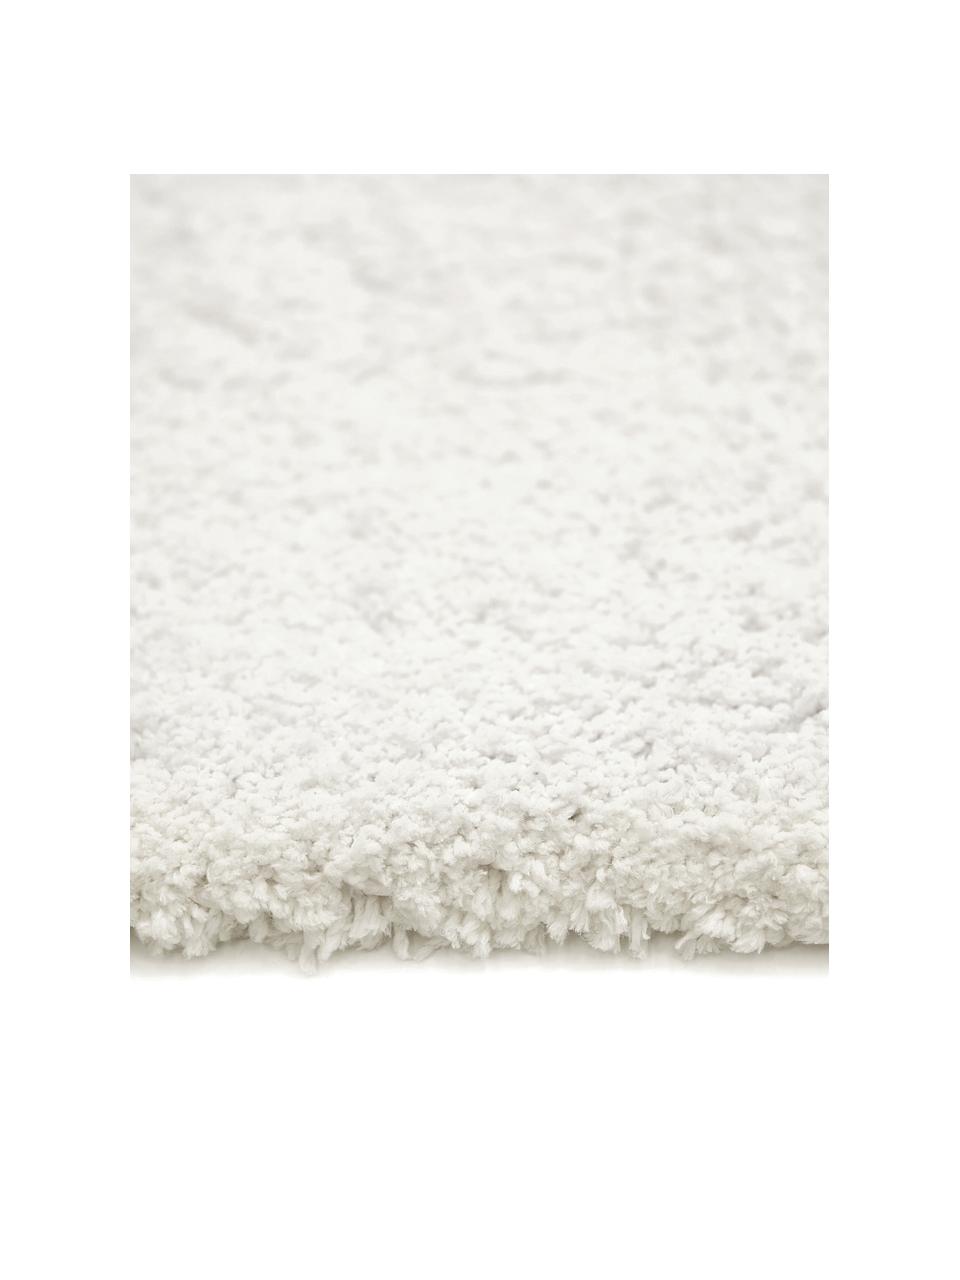 Pluizig rond hoogpoolig vloerkleed Leighton in crèmekleur, Onderzijde: 70% polyester, 30% katoen, Crèmewit, Ø 150 cm (maat M)